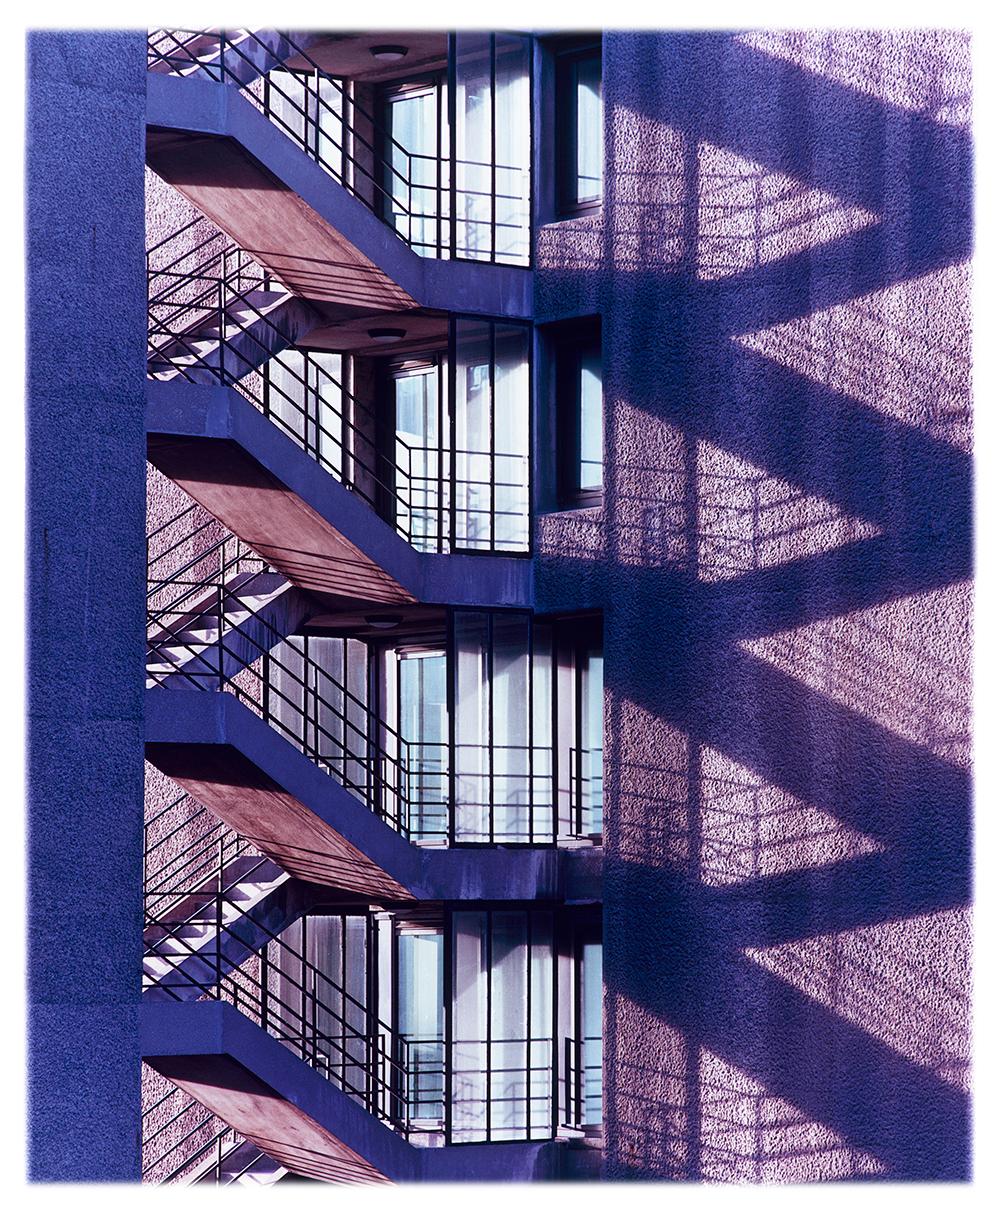 Richard Heeps Color Photograph - Brutalist Symphony II, London - Conceptual, architectural, color photography